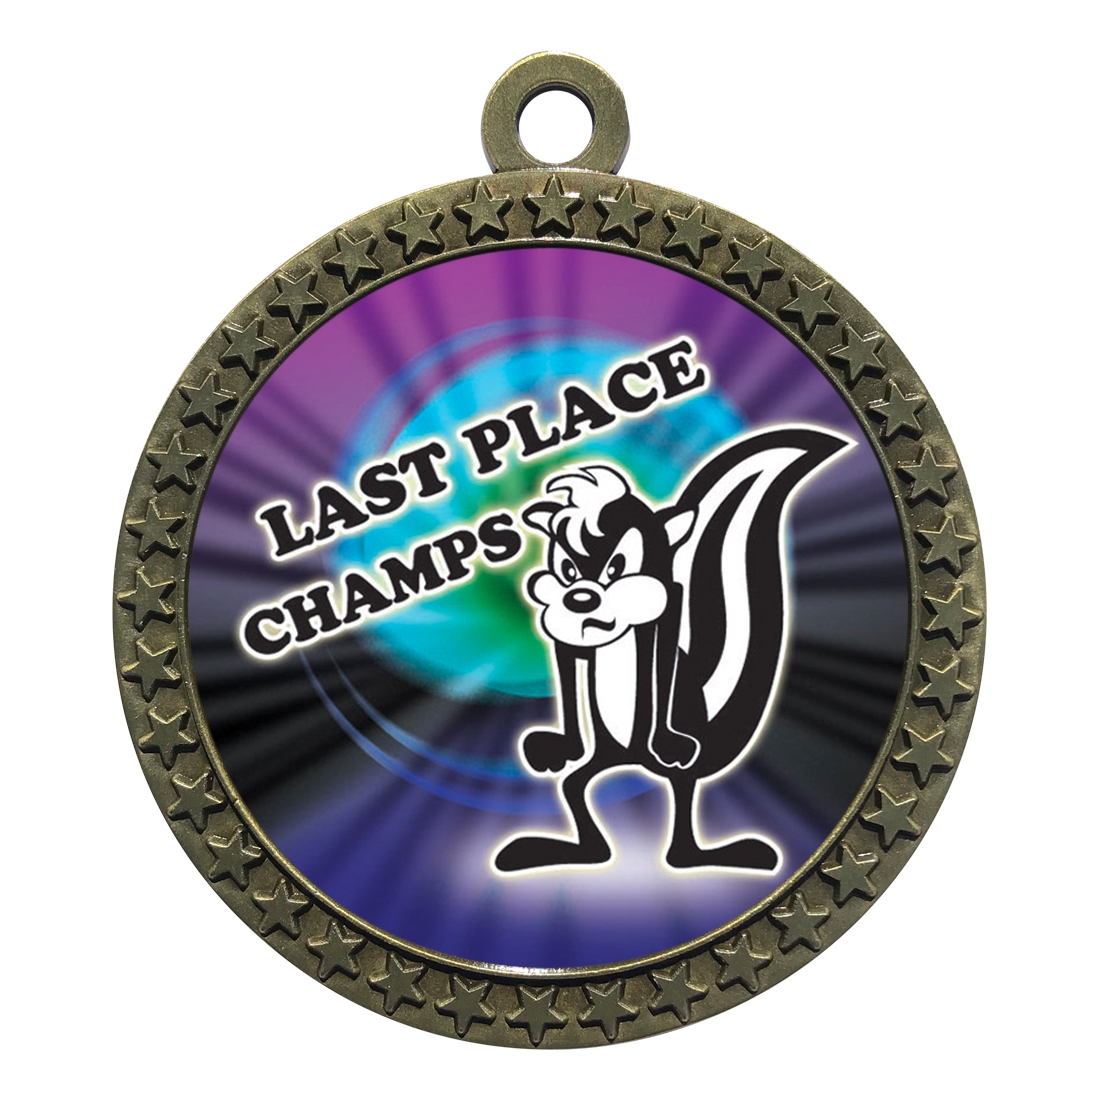 2-1/2" Last Place Loser Medal